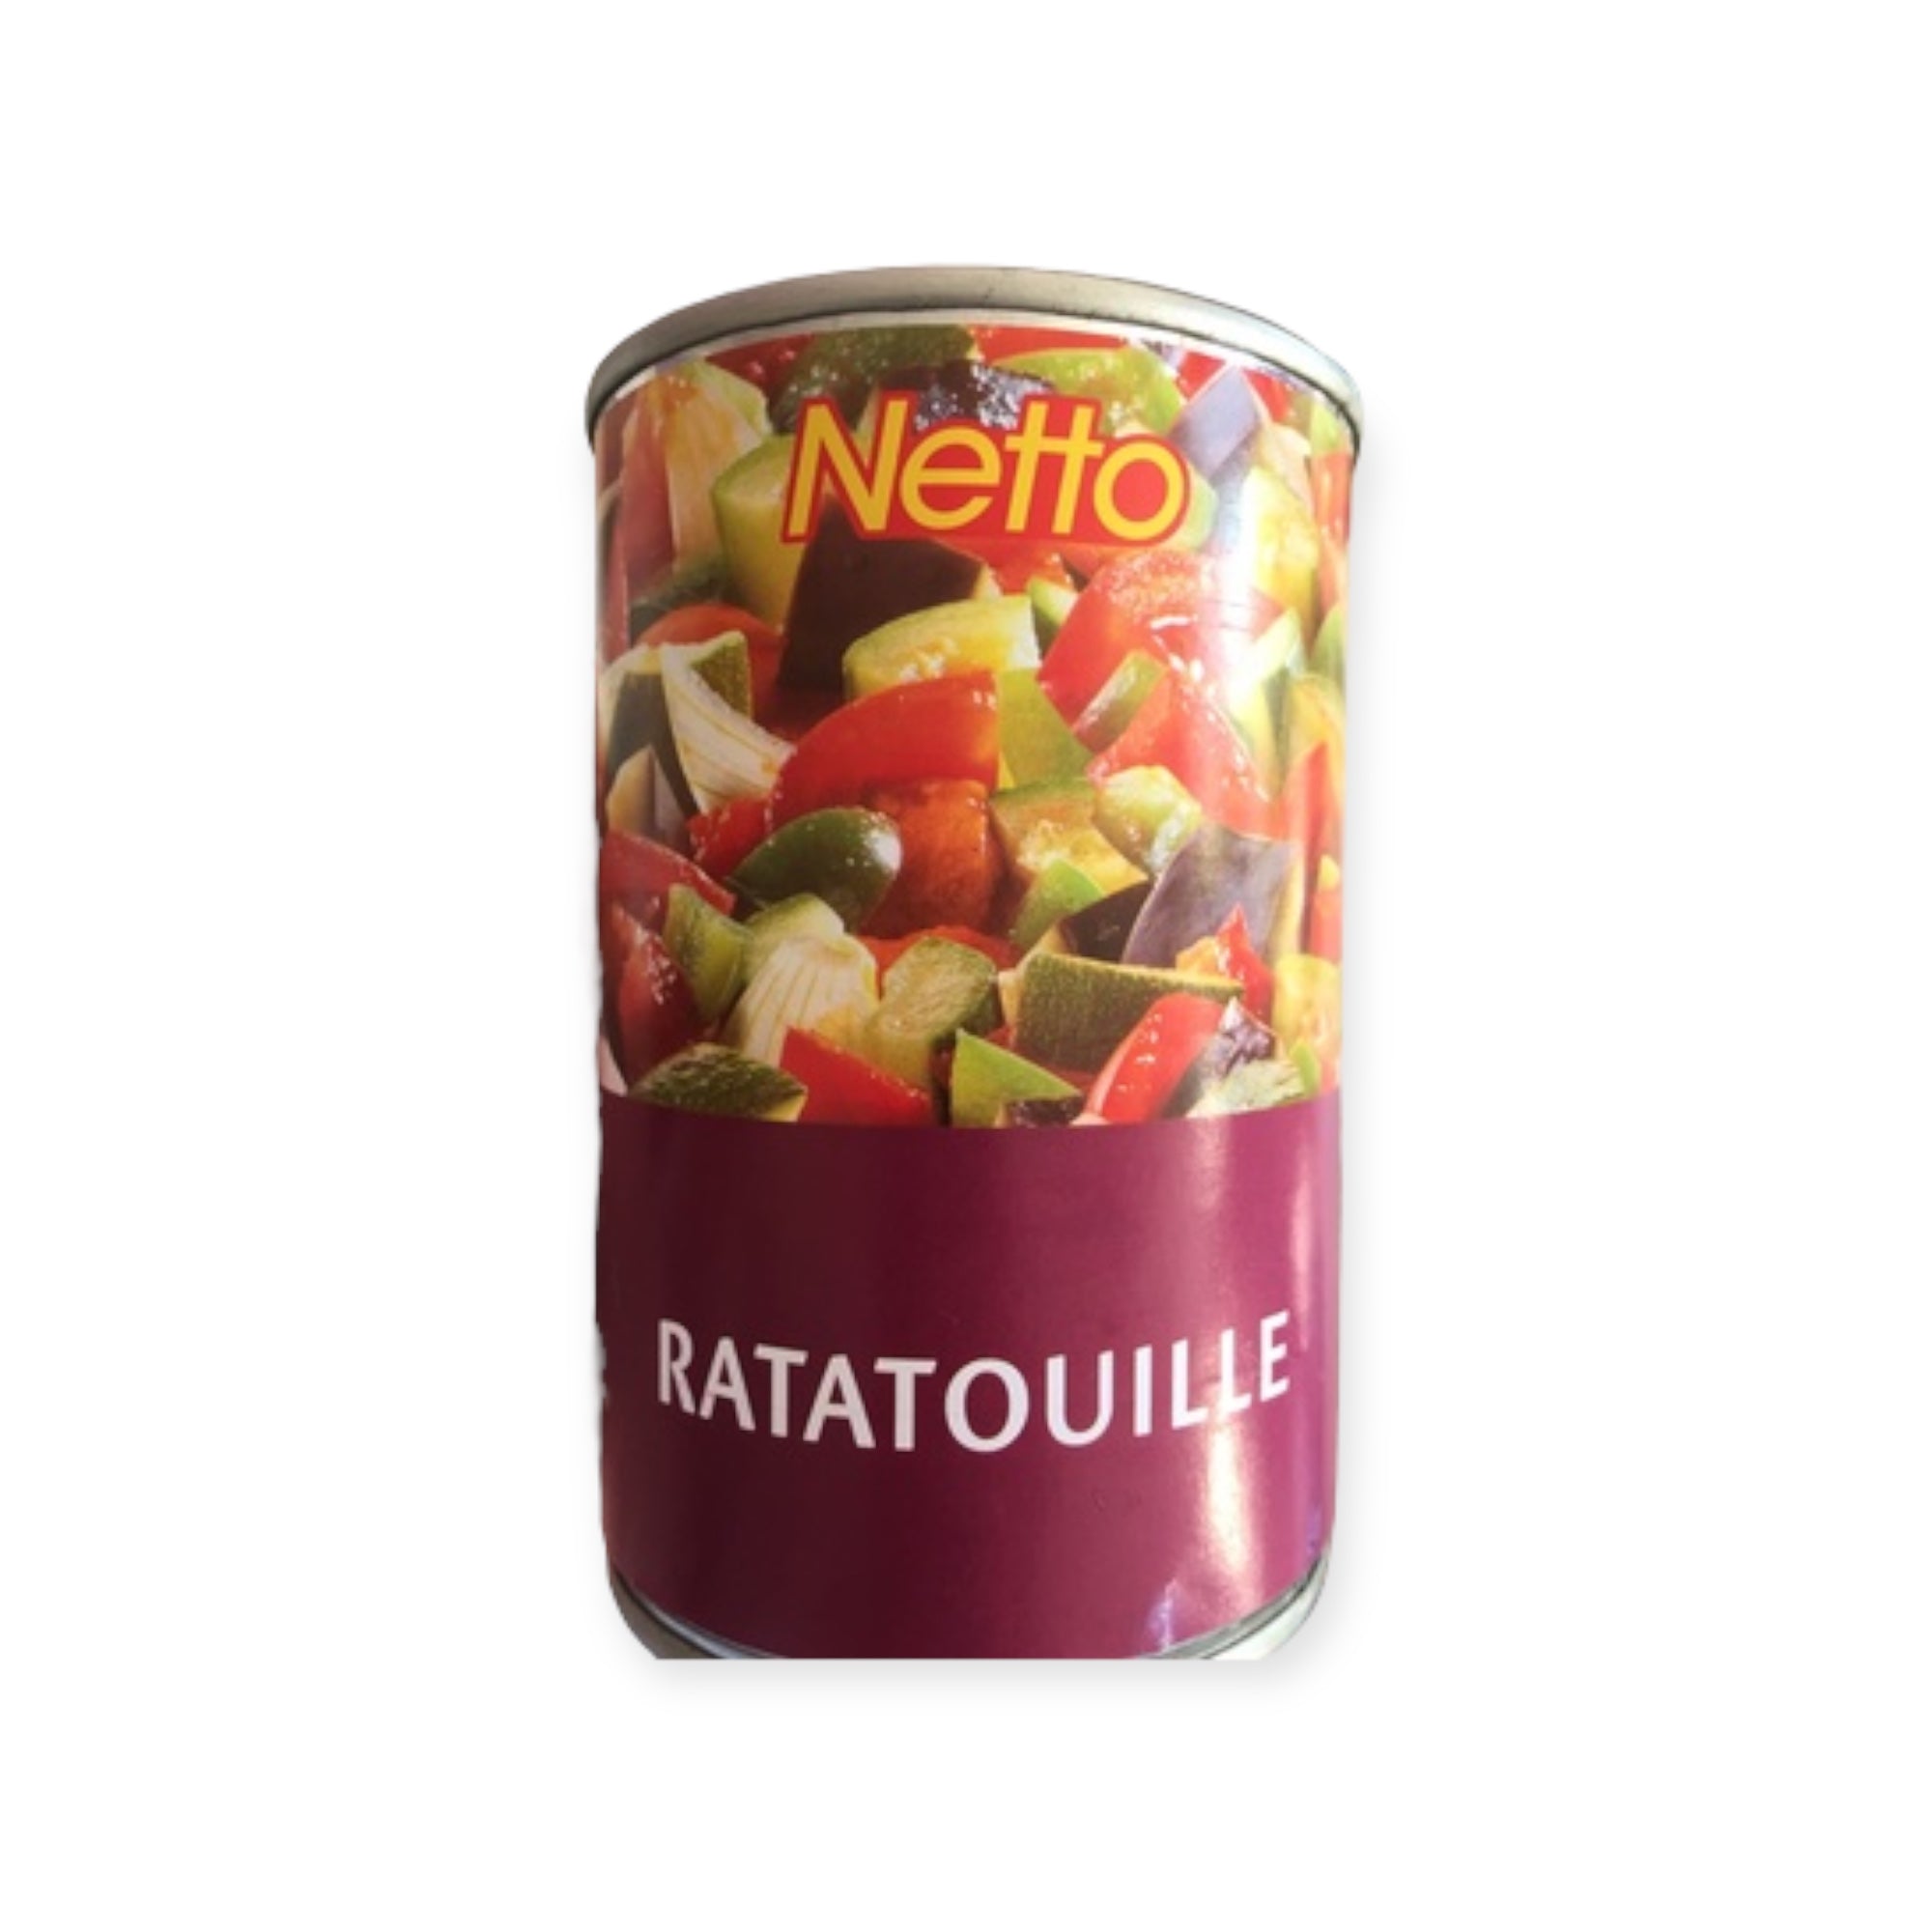 NETTO Ratatouille Nicoise 375g -i64